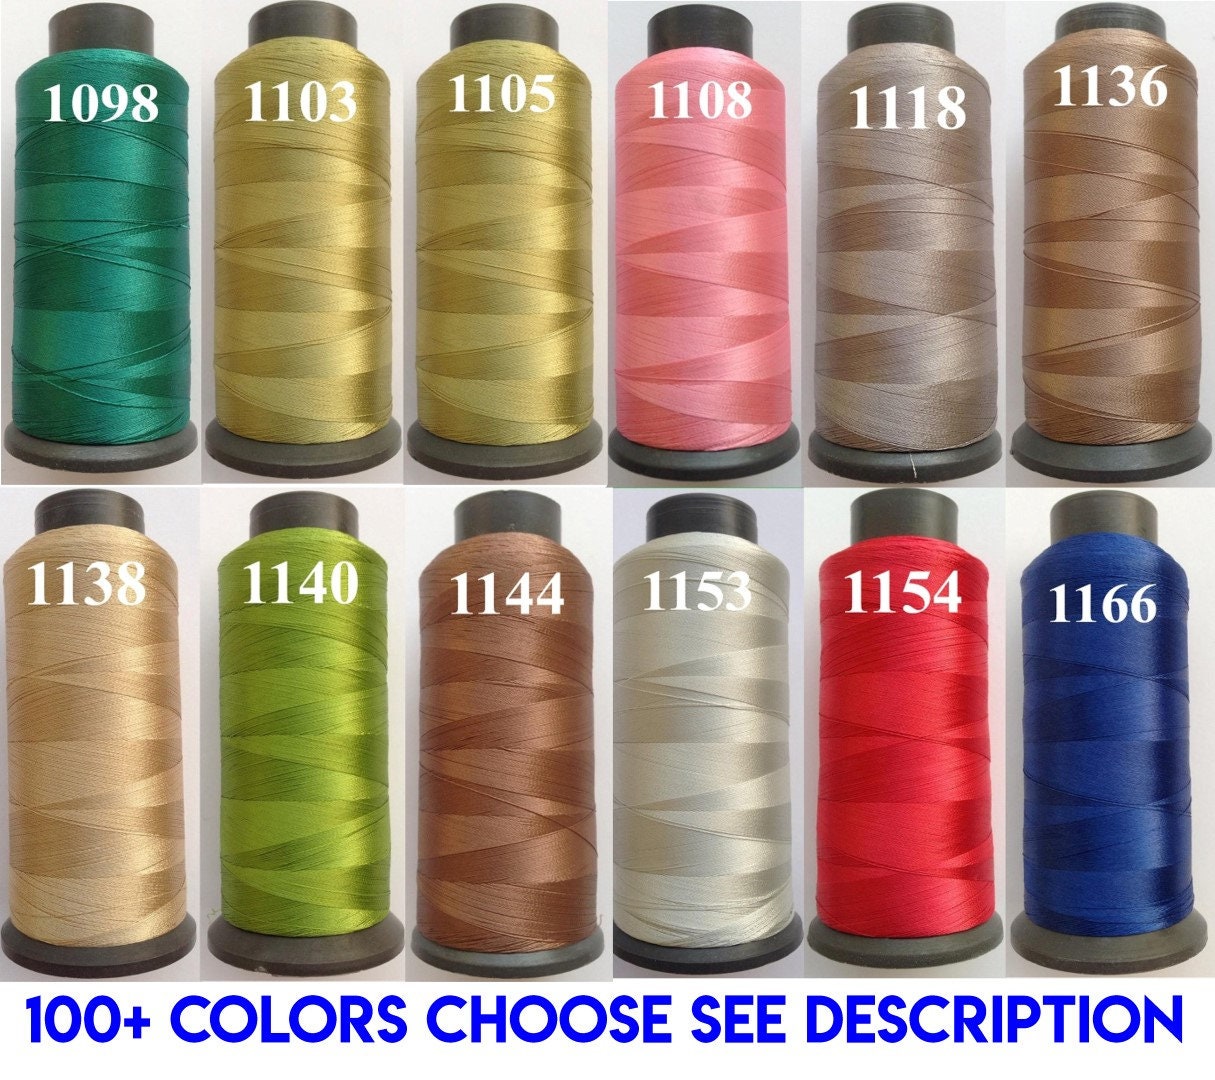 1 CRESCENT Viscose Rayon Silk Embroidery Machine Thread Cone 2500Mtr.1 Flat Pstg 